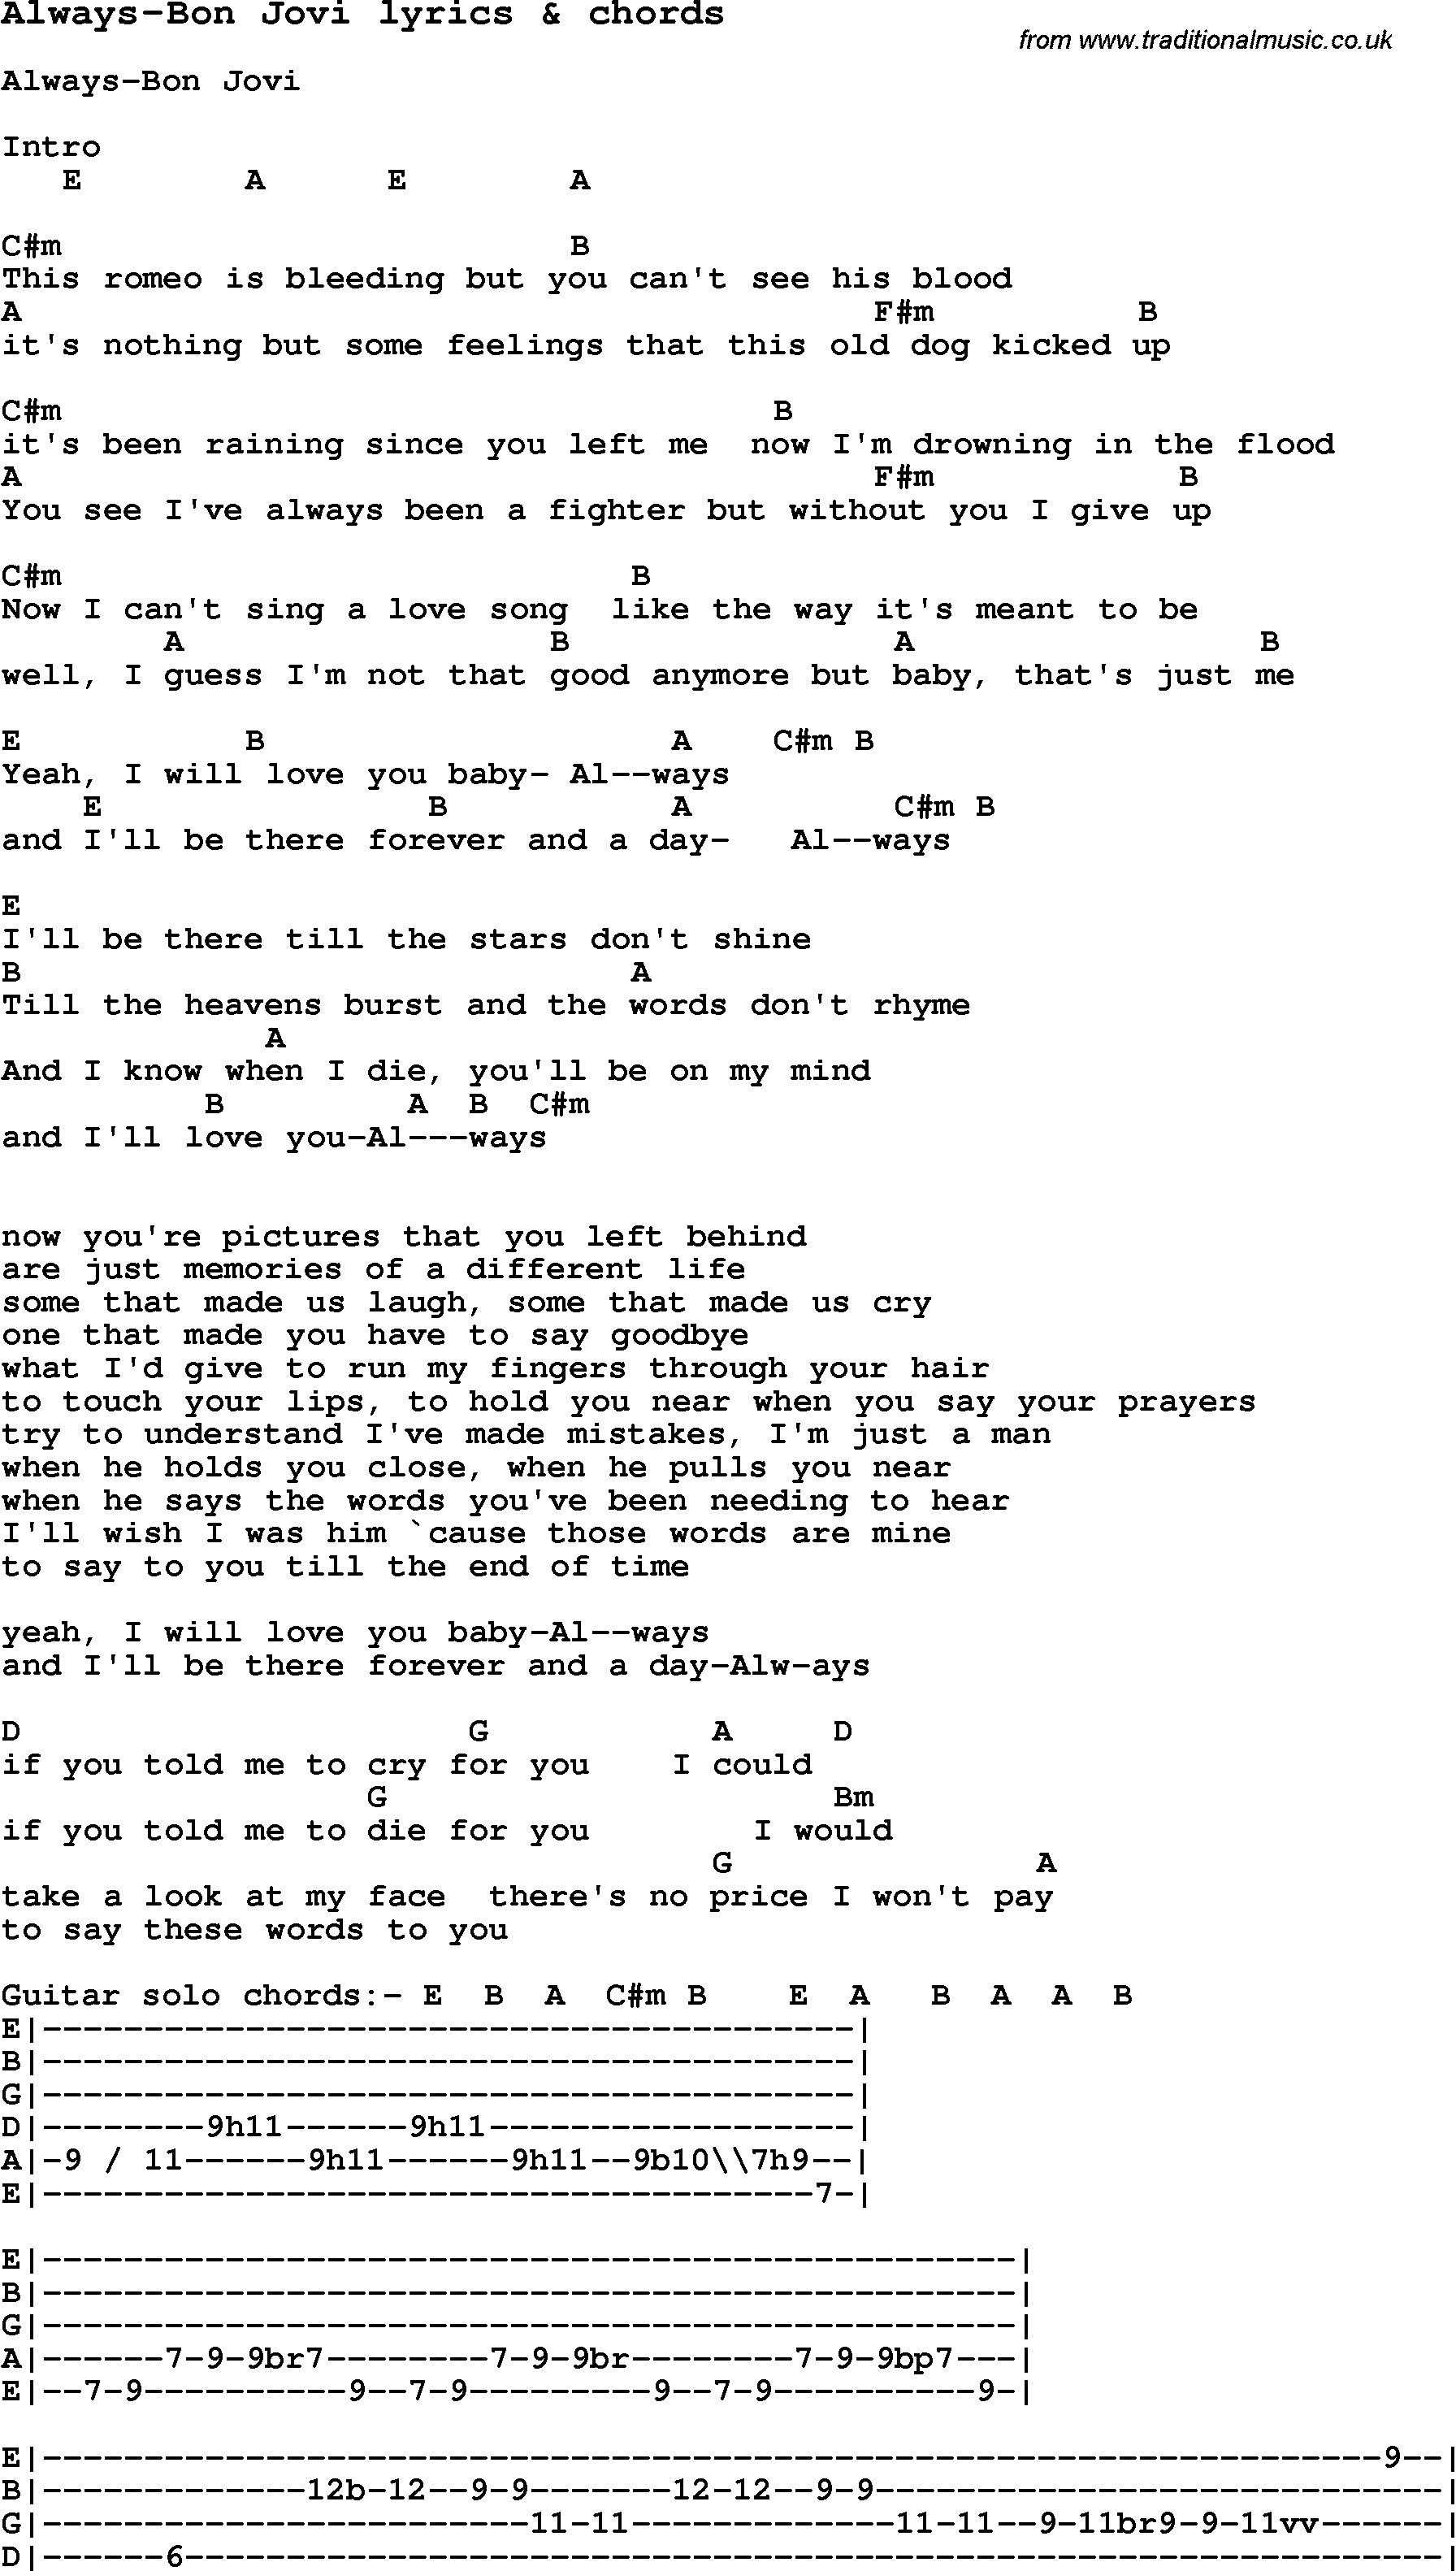 Love Song Lyrics for: Always-Bon Jovi with chords for Ukulele, Guitar Banjo etc.